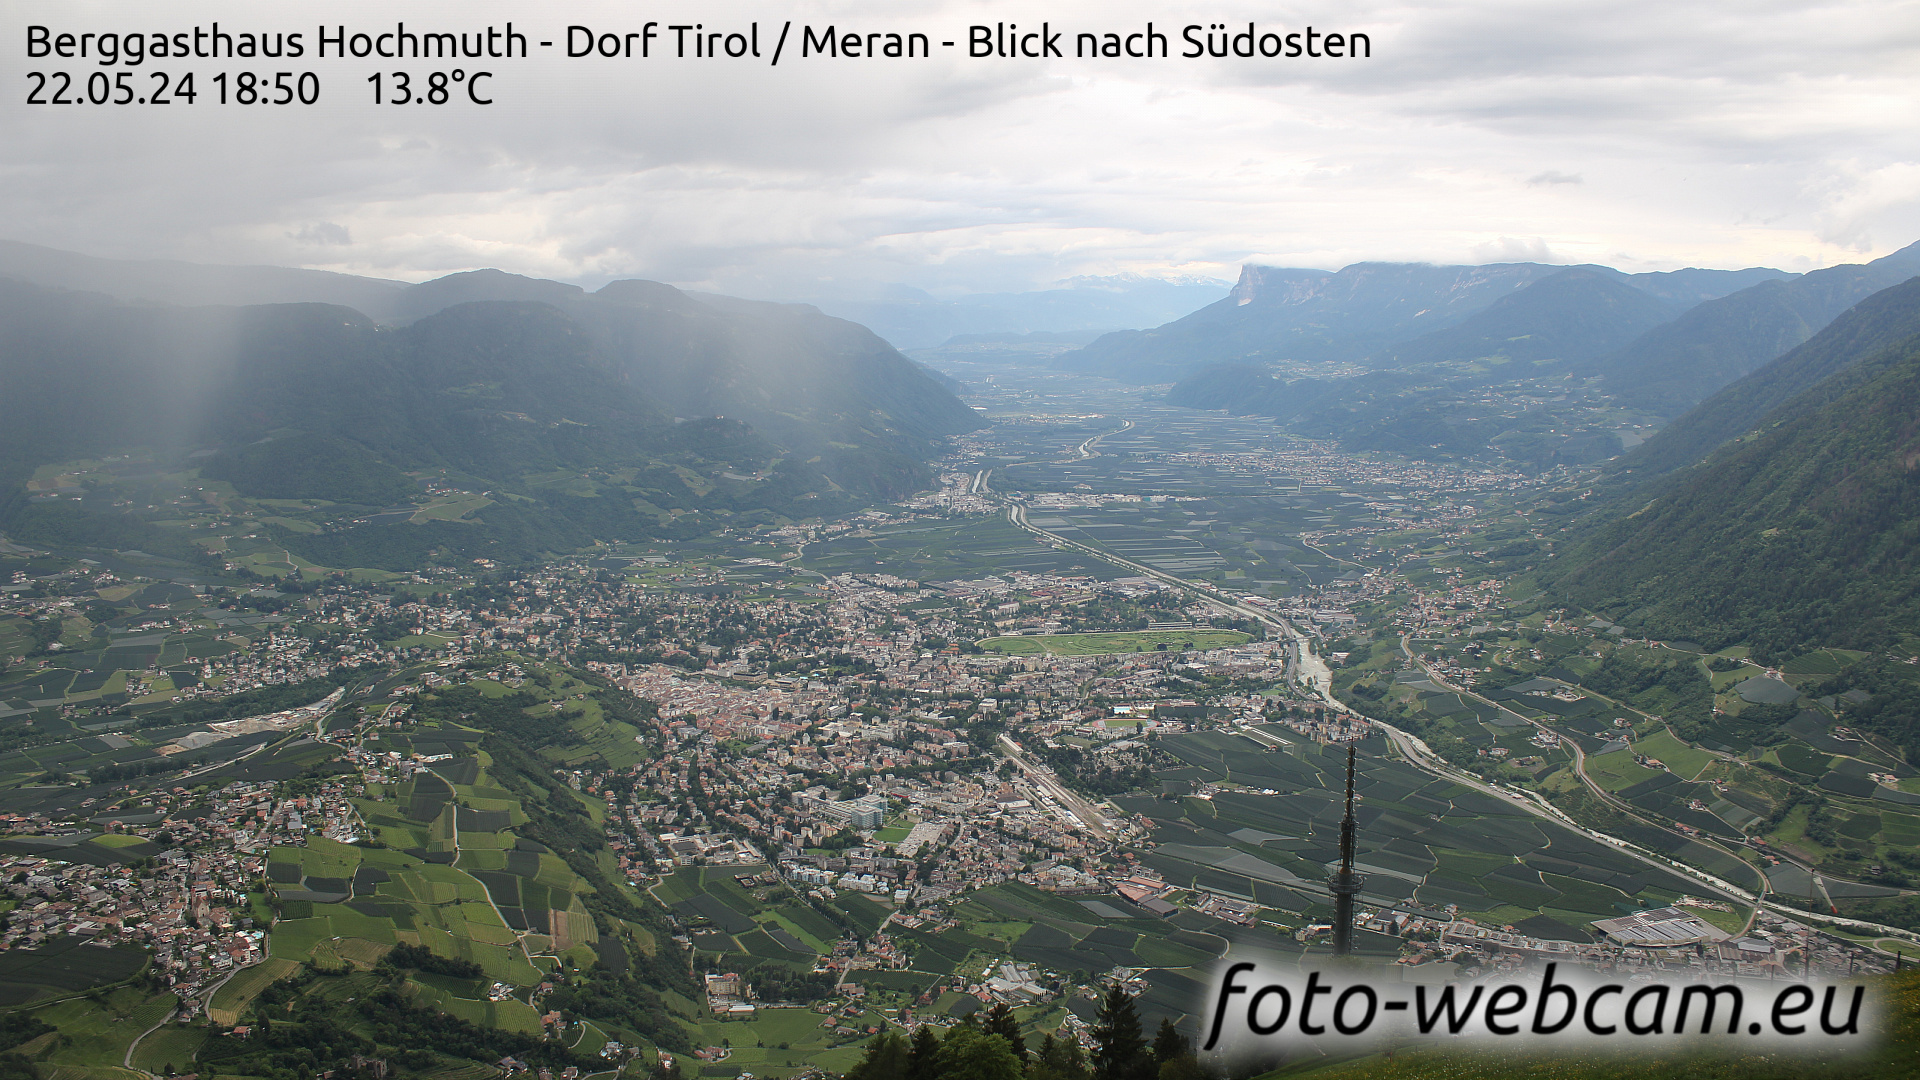 Dorf Tirol Ma. 18:56